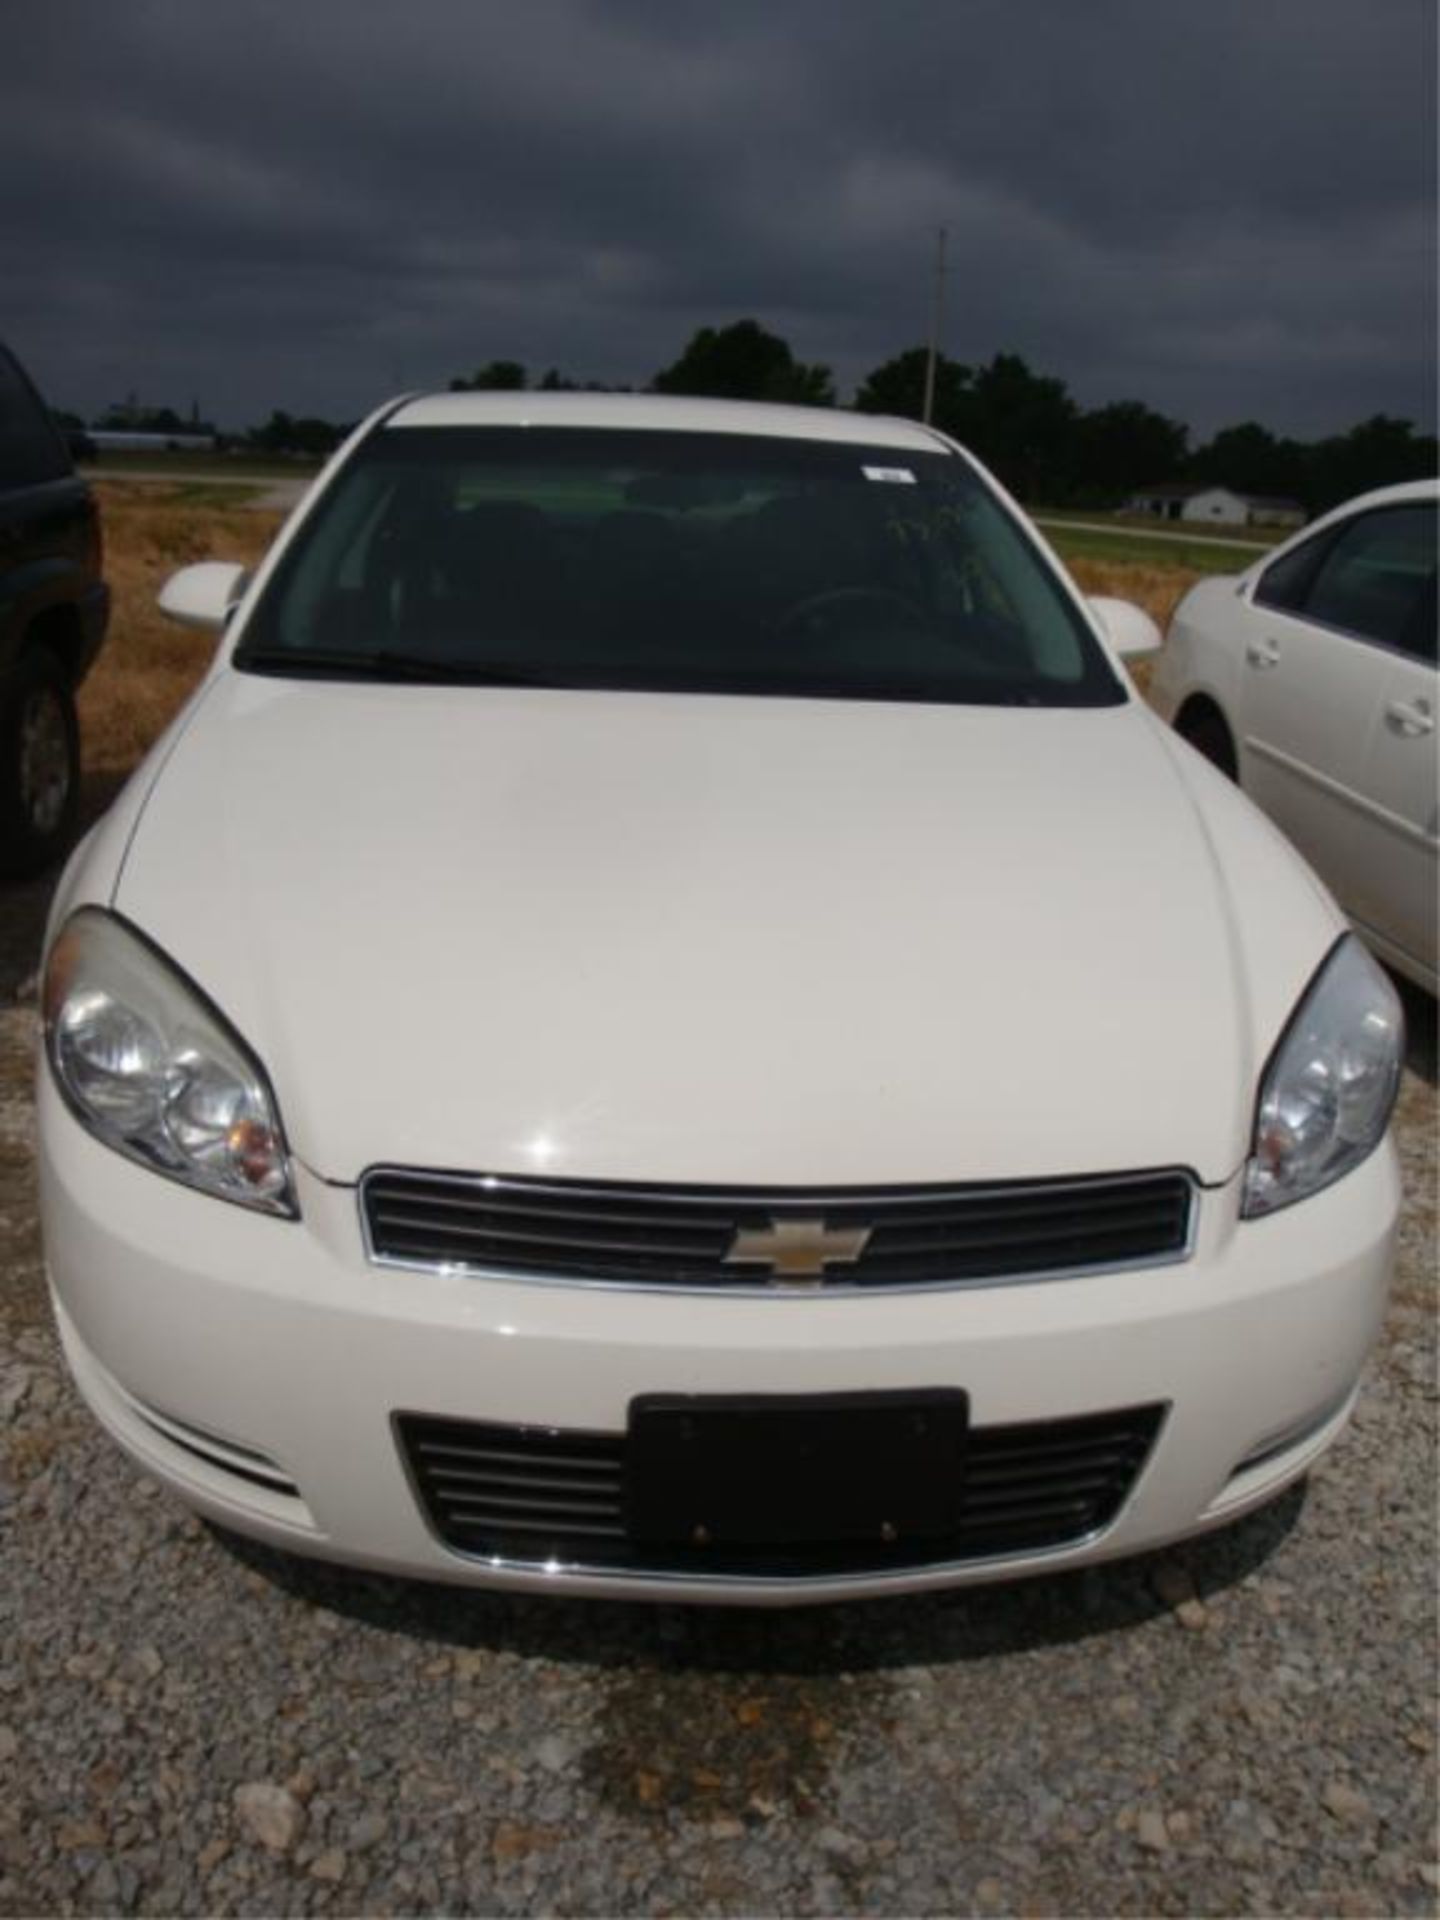 (Title) 2007 Chevrolet Impala 4 door, 3900 V6,73,036 mi. vin 2G1WS55R979417943 - Image 4 of 10